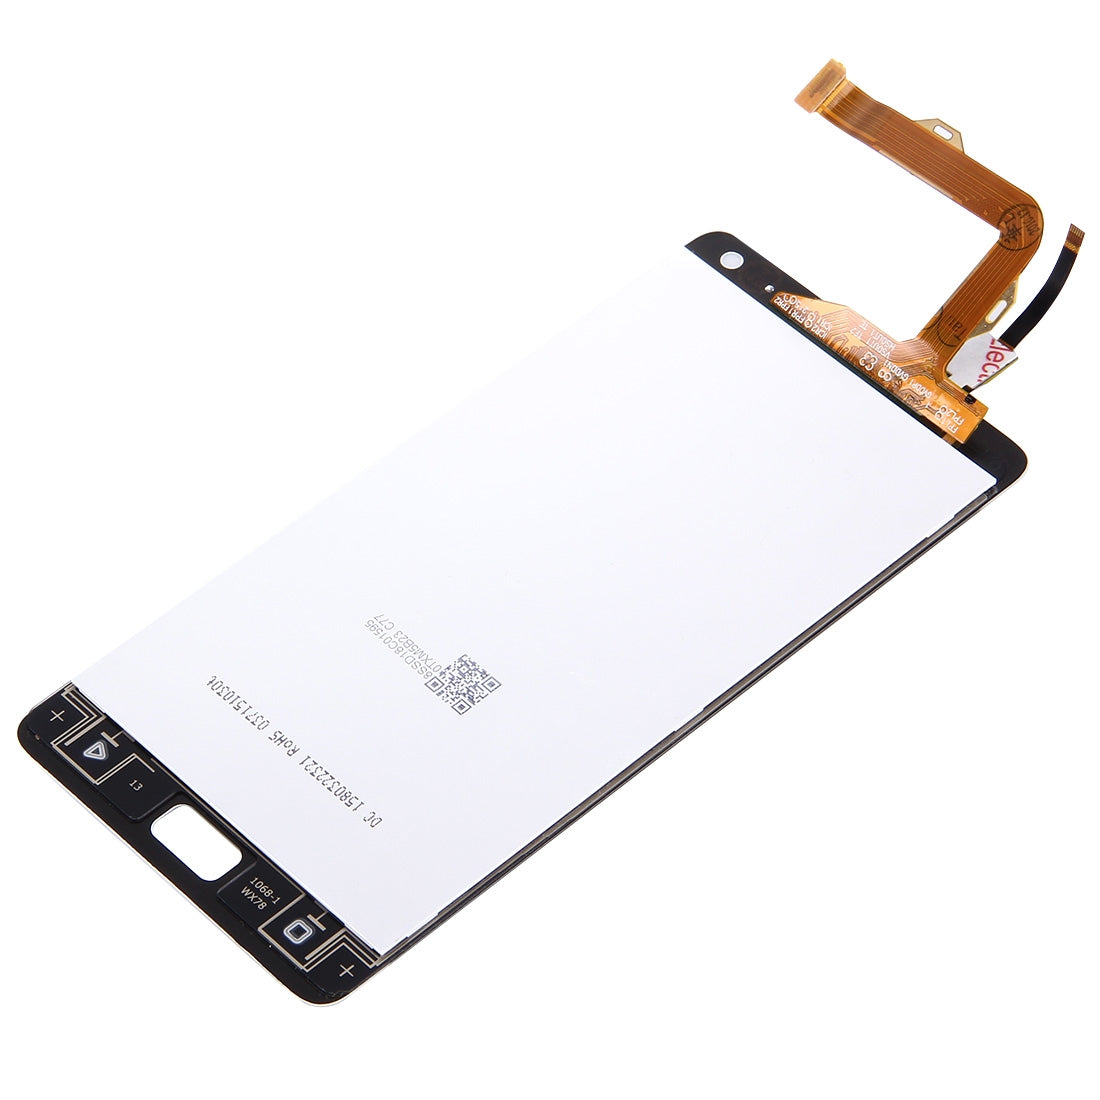 Pantalla LCD + Tactil Digitalizador Lenovo Vibe P1 P1c72 5.5 Blanco